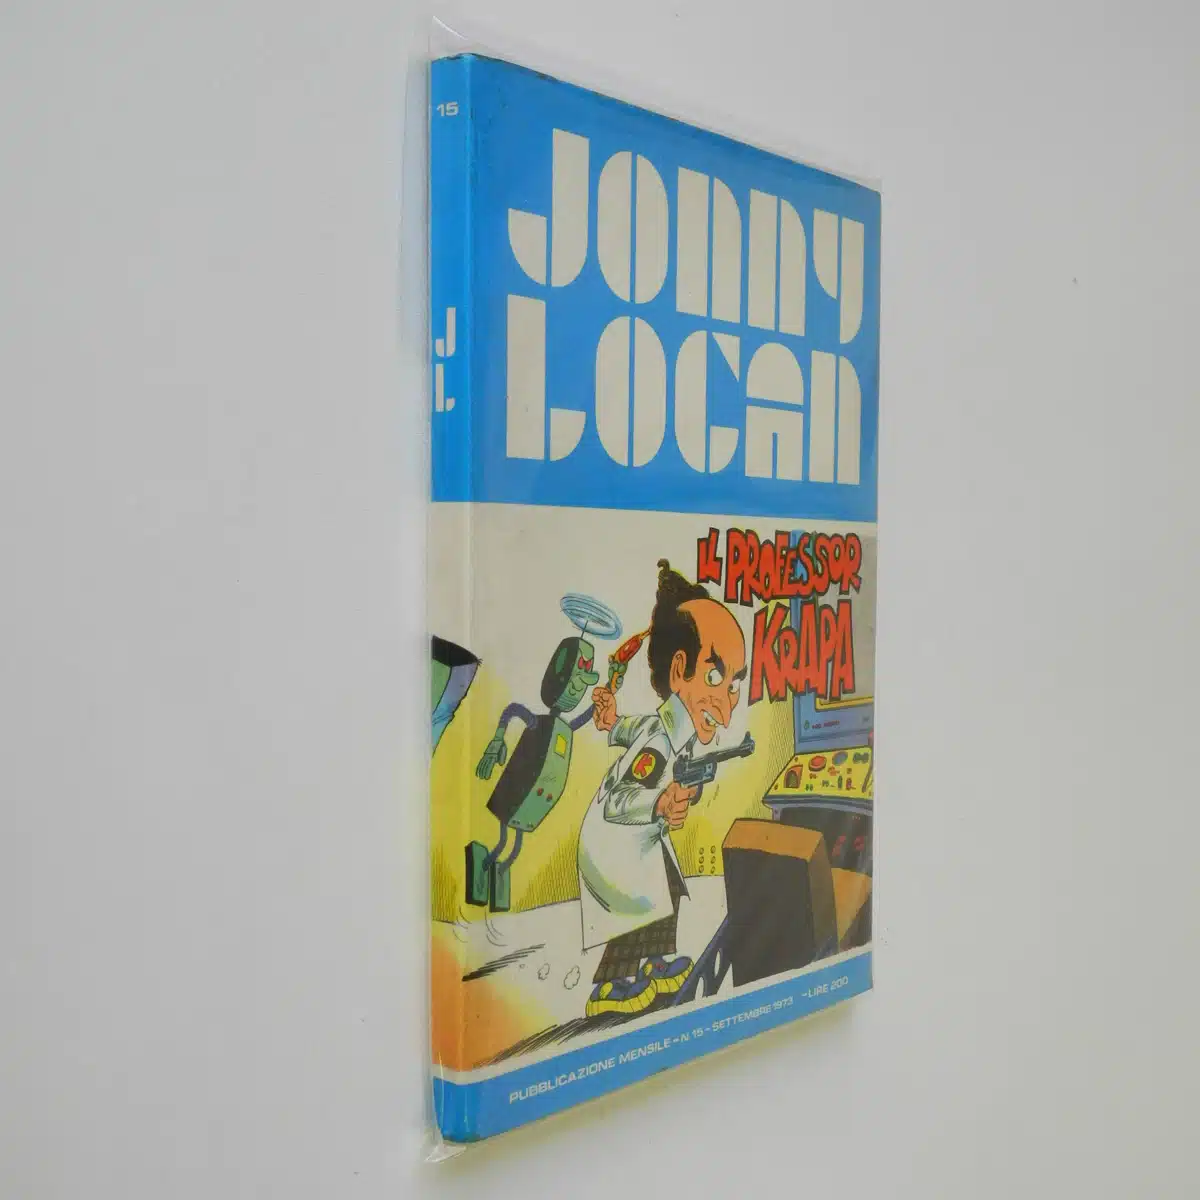 Jonny Logan n. 15 Dardo